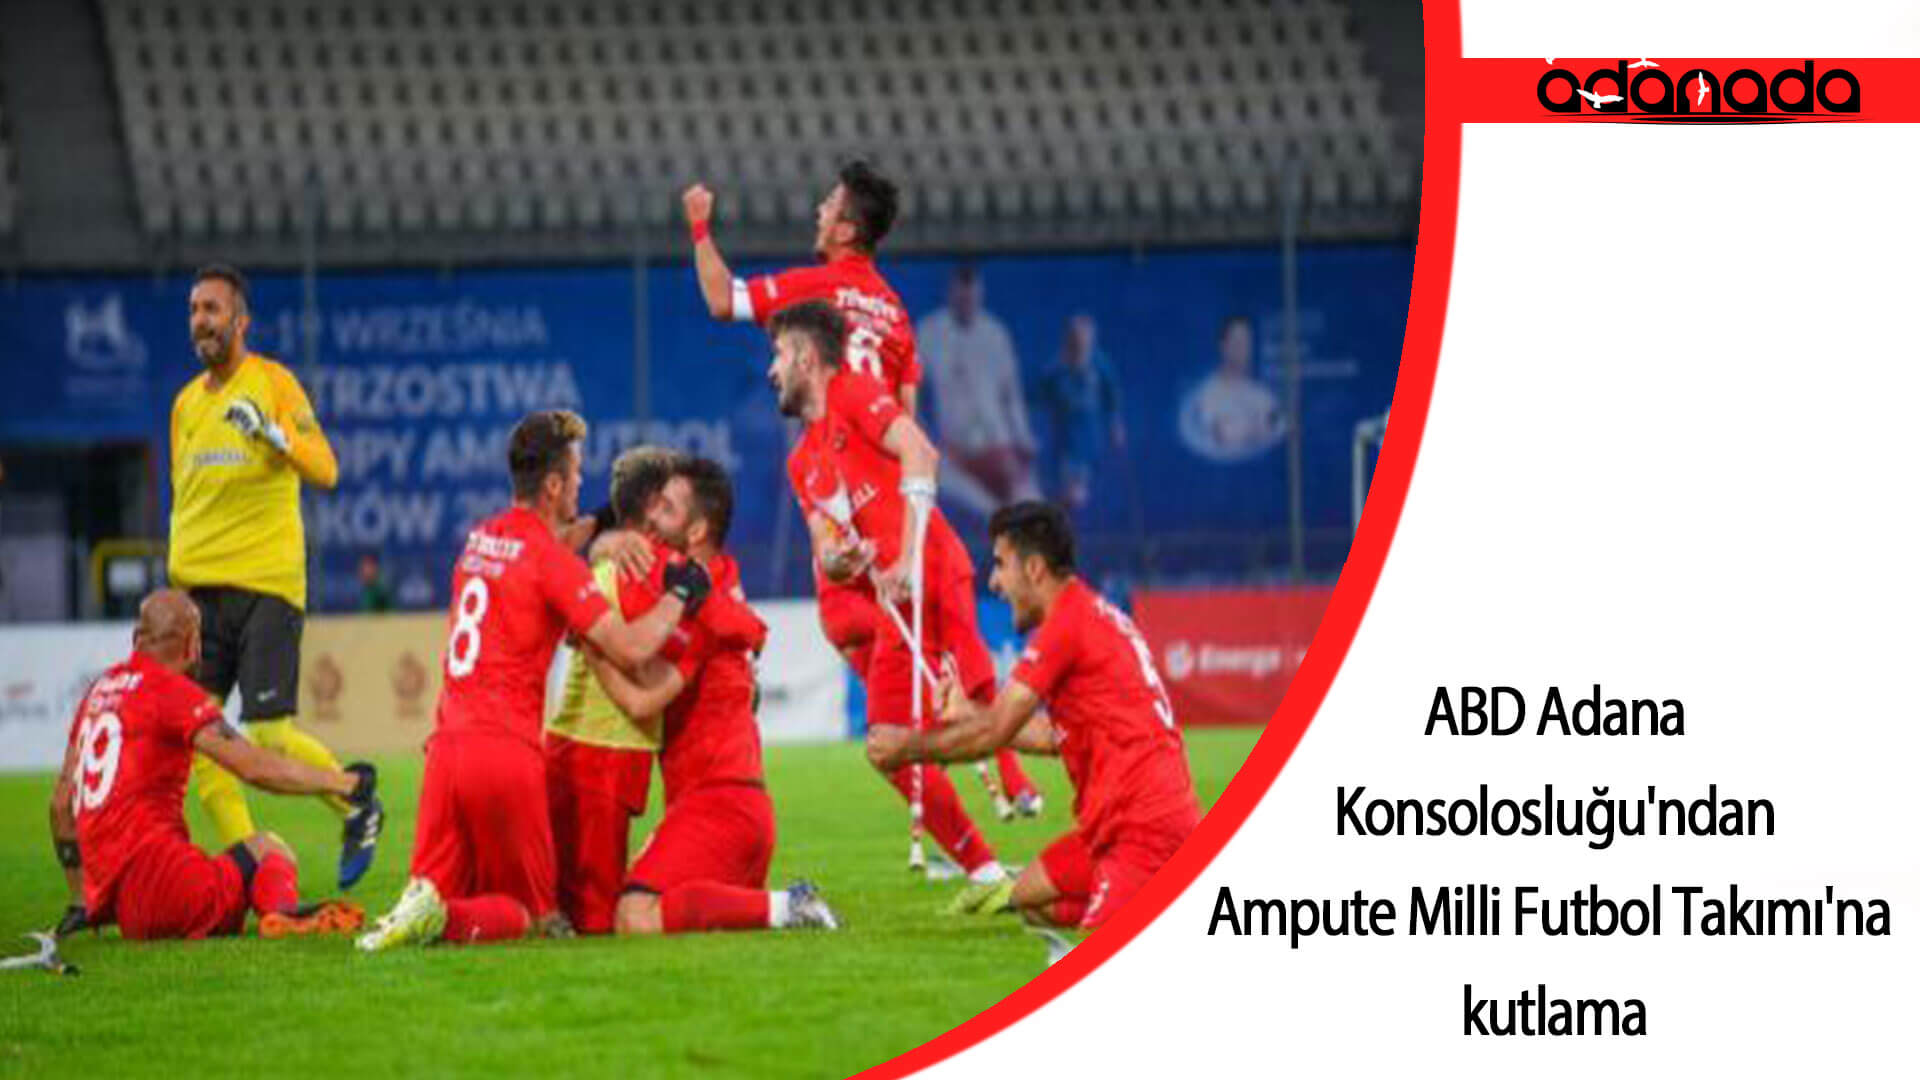 ABD Adana Konsolosluğu’ndan Ampute Milli Futbol Takımı’na kutlama